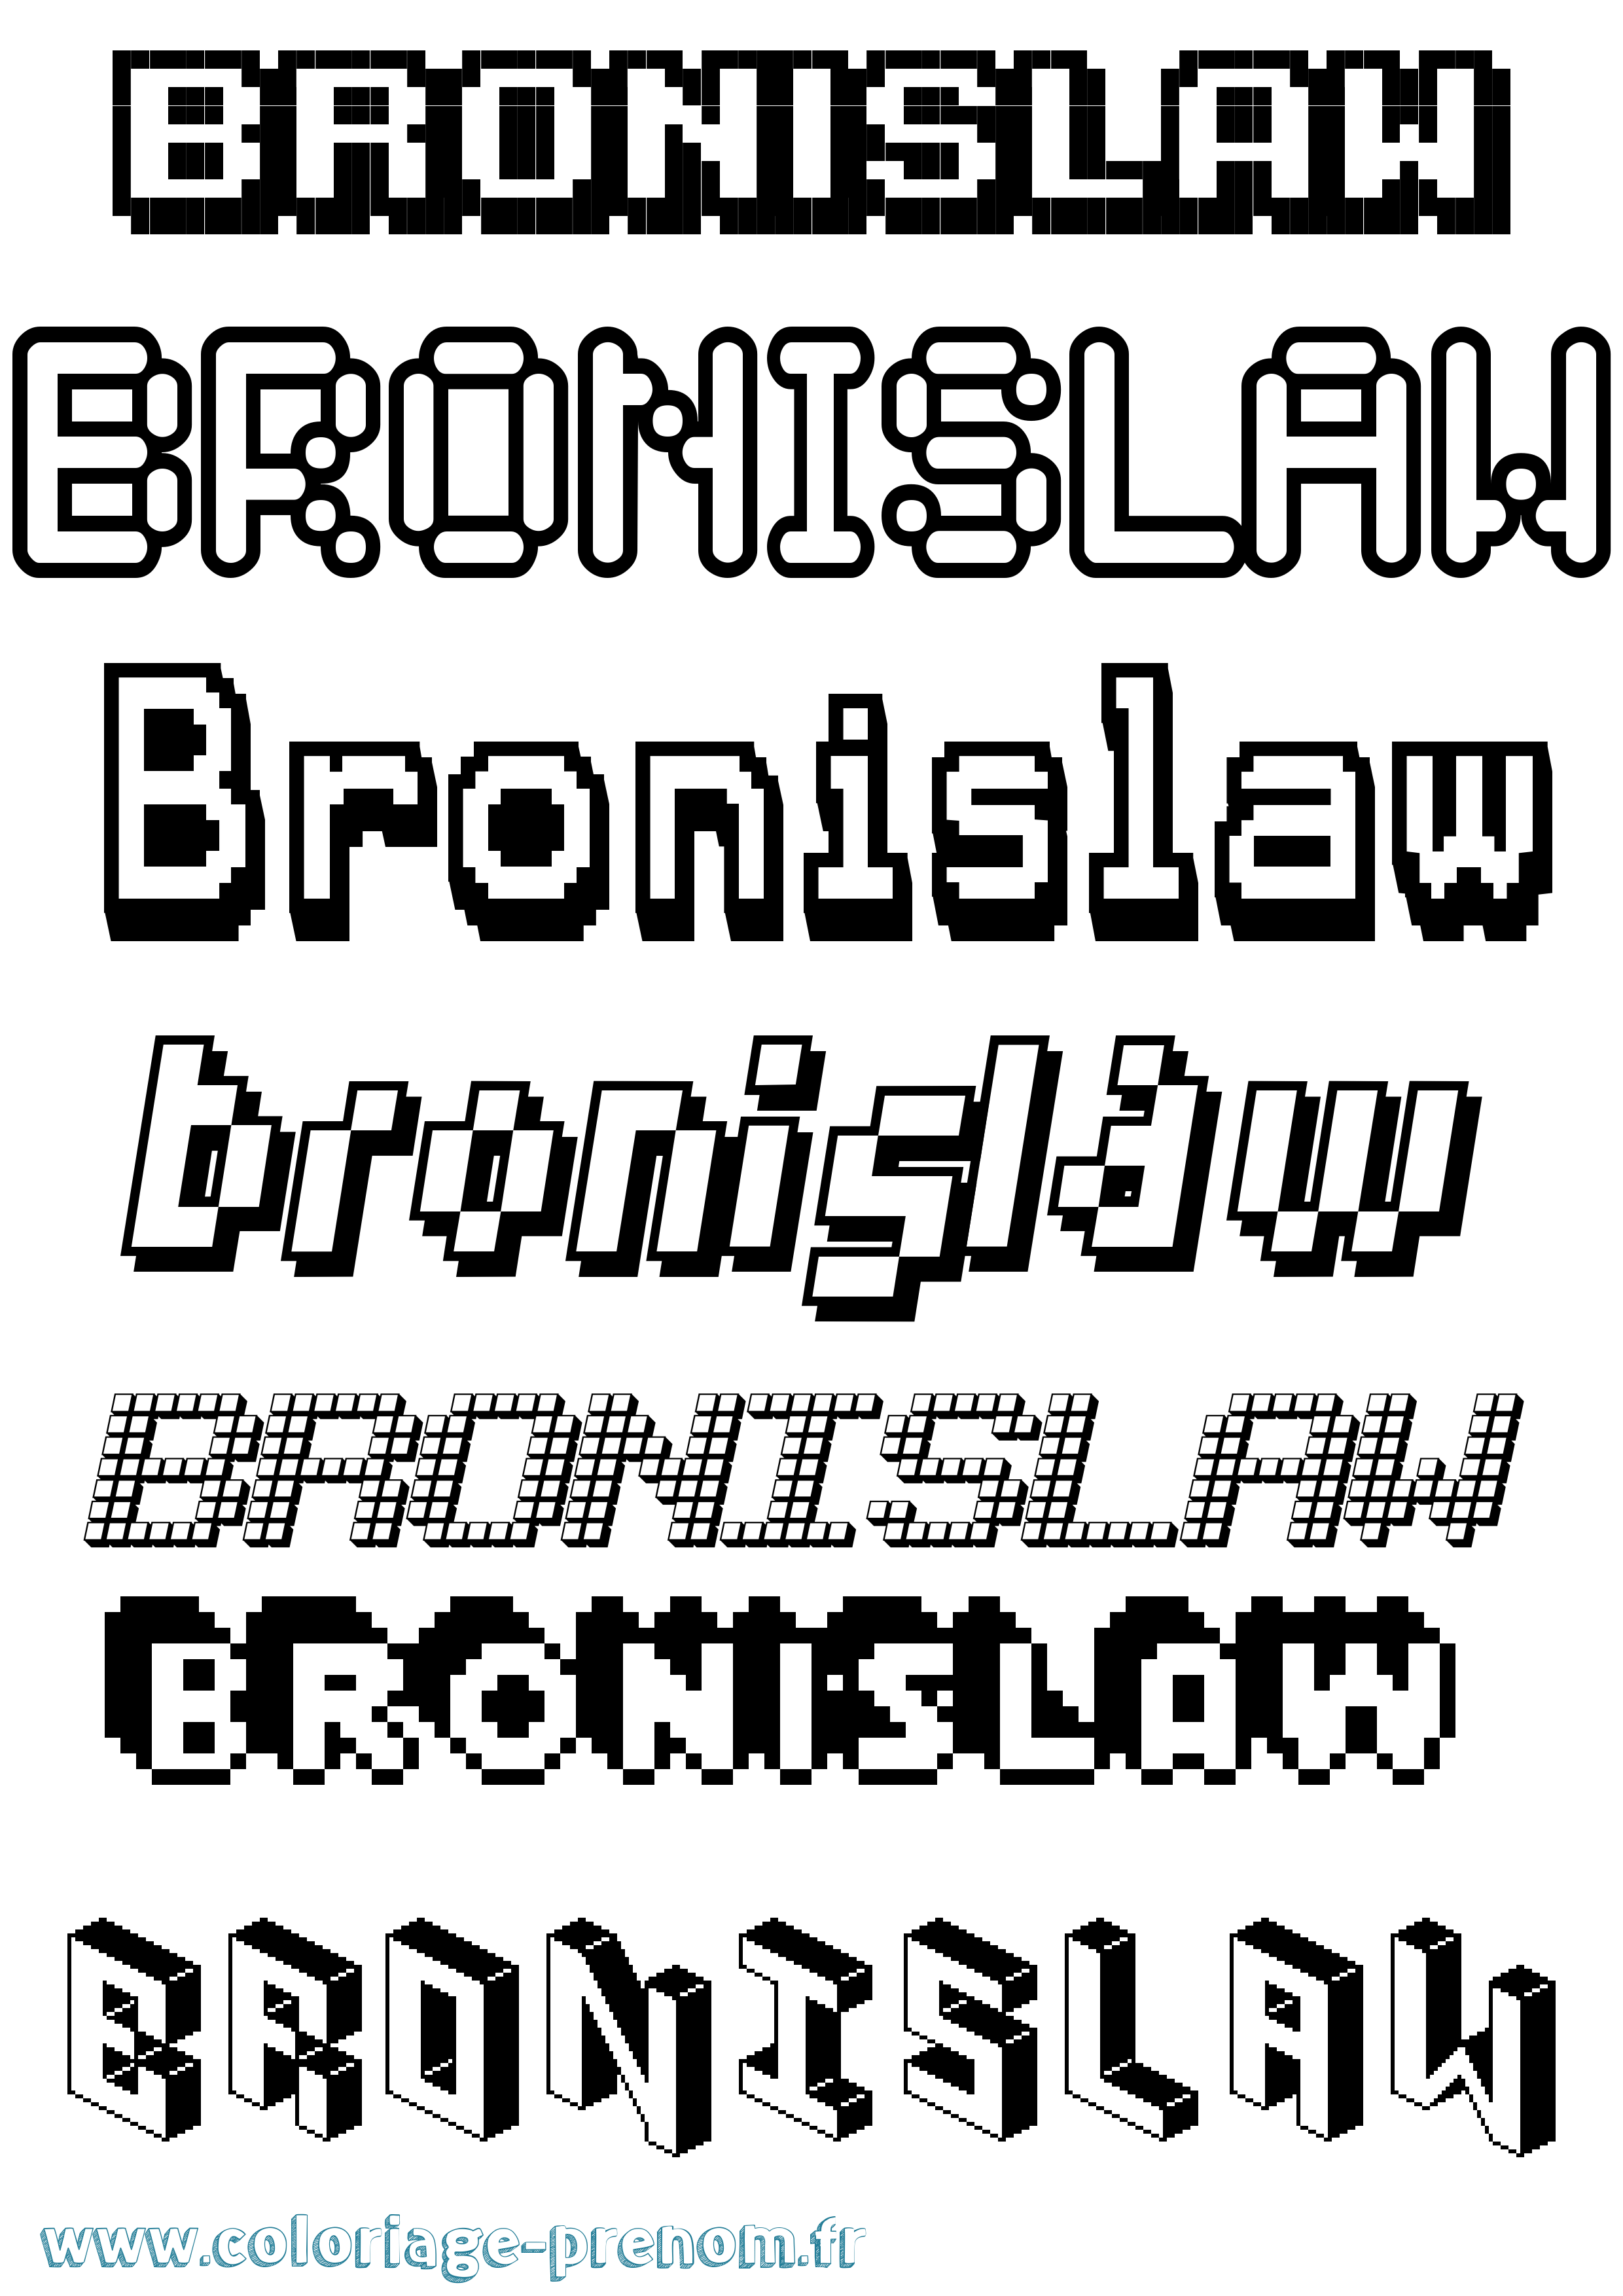 Coloriage prénom Bronislaw Pixel